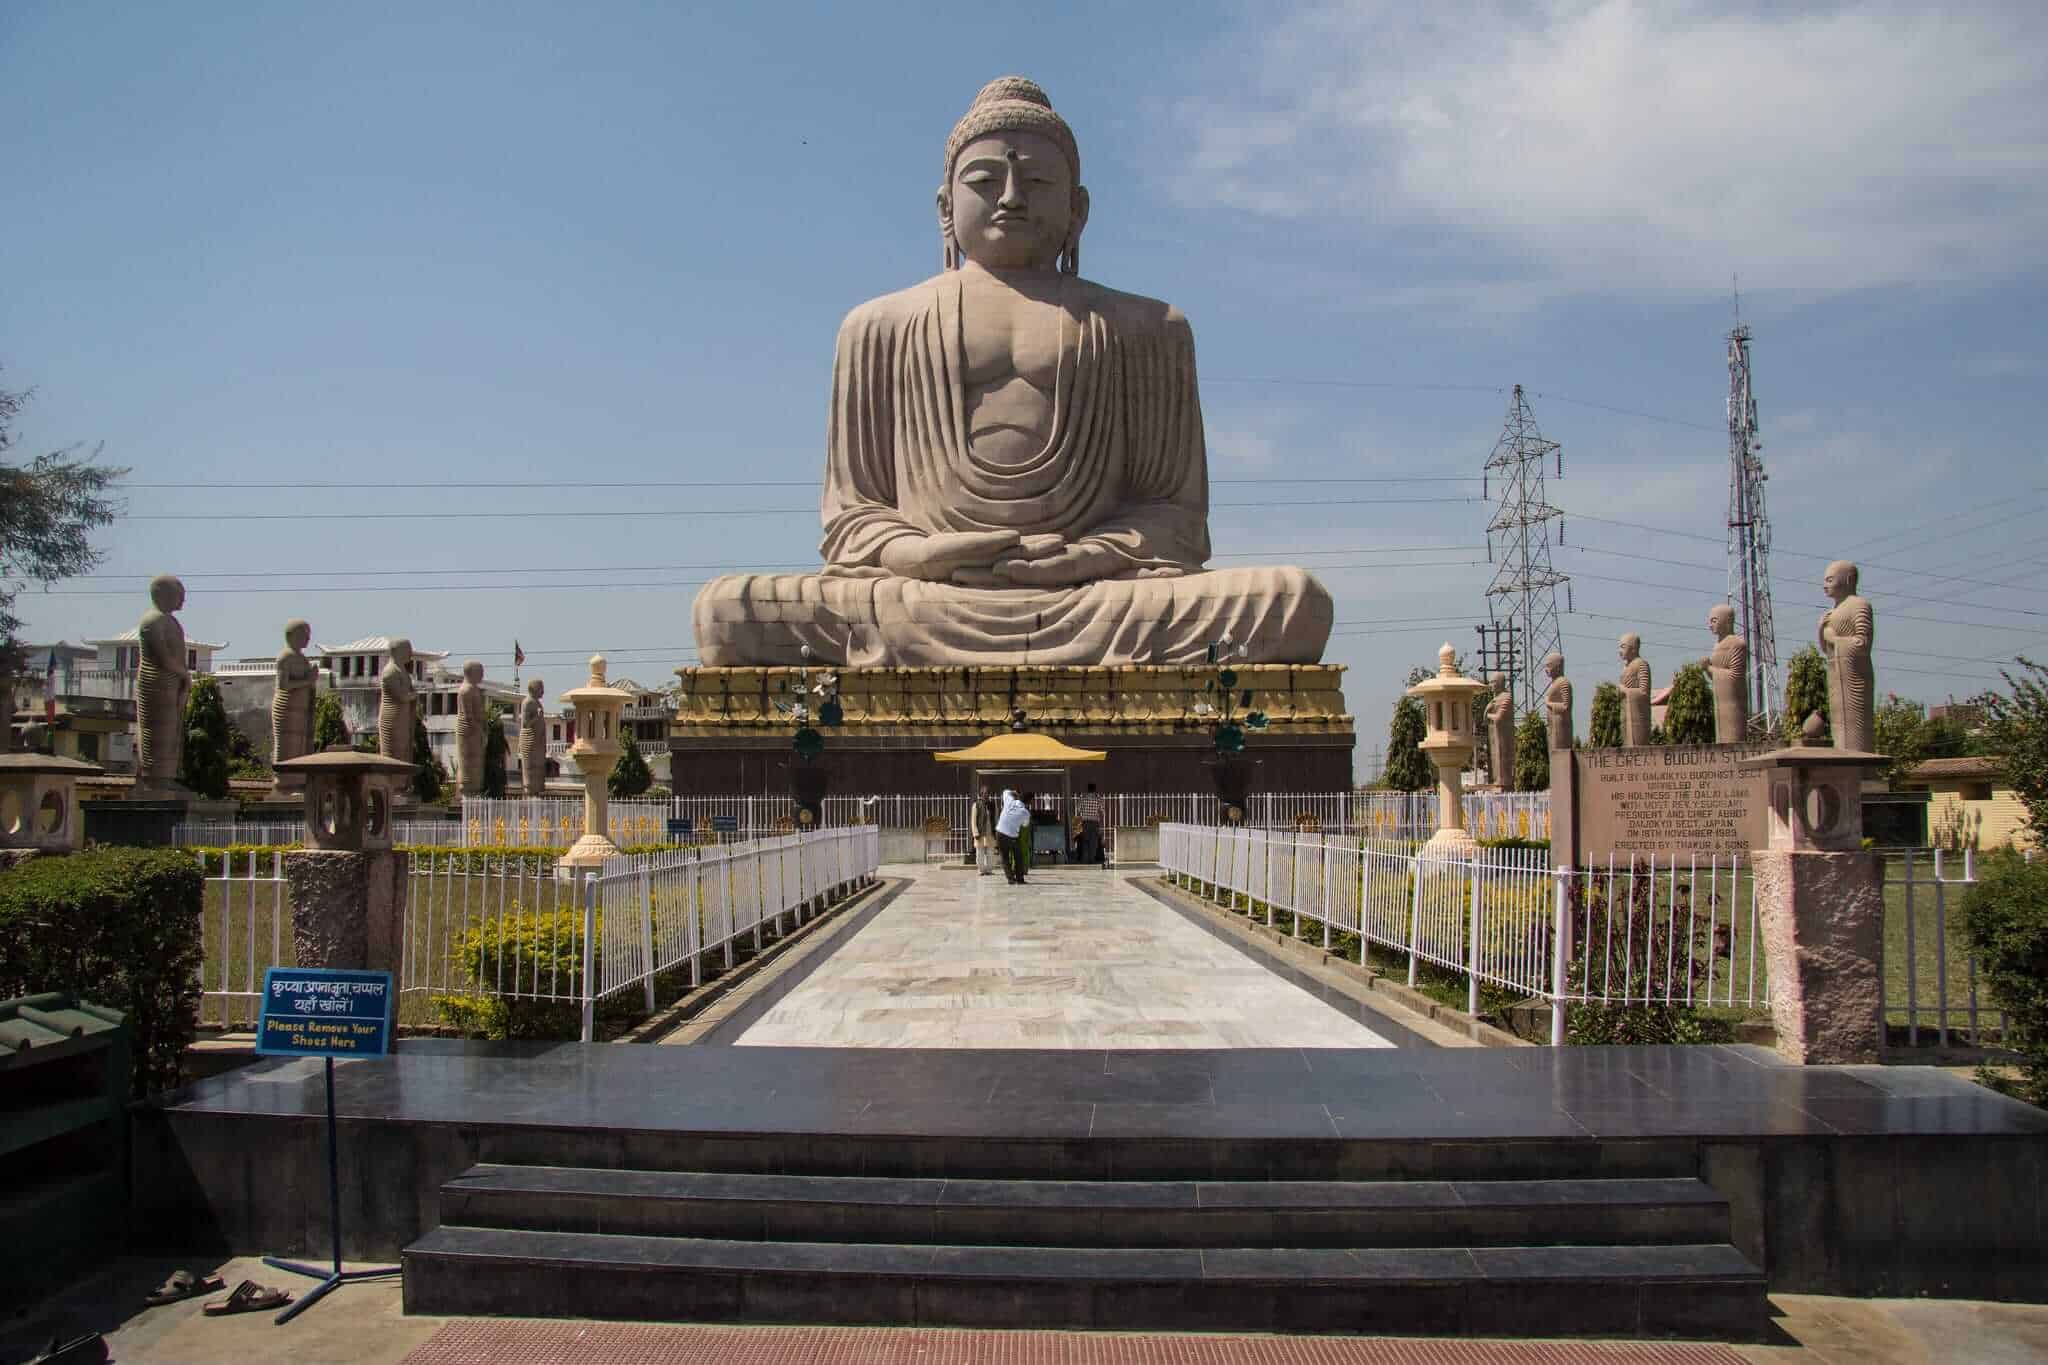 Giant Buddha, Bodh Gaya, Bihar, India